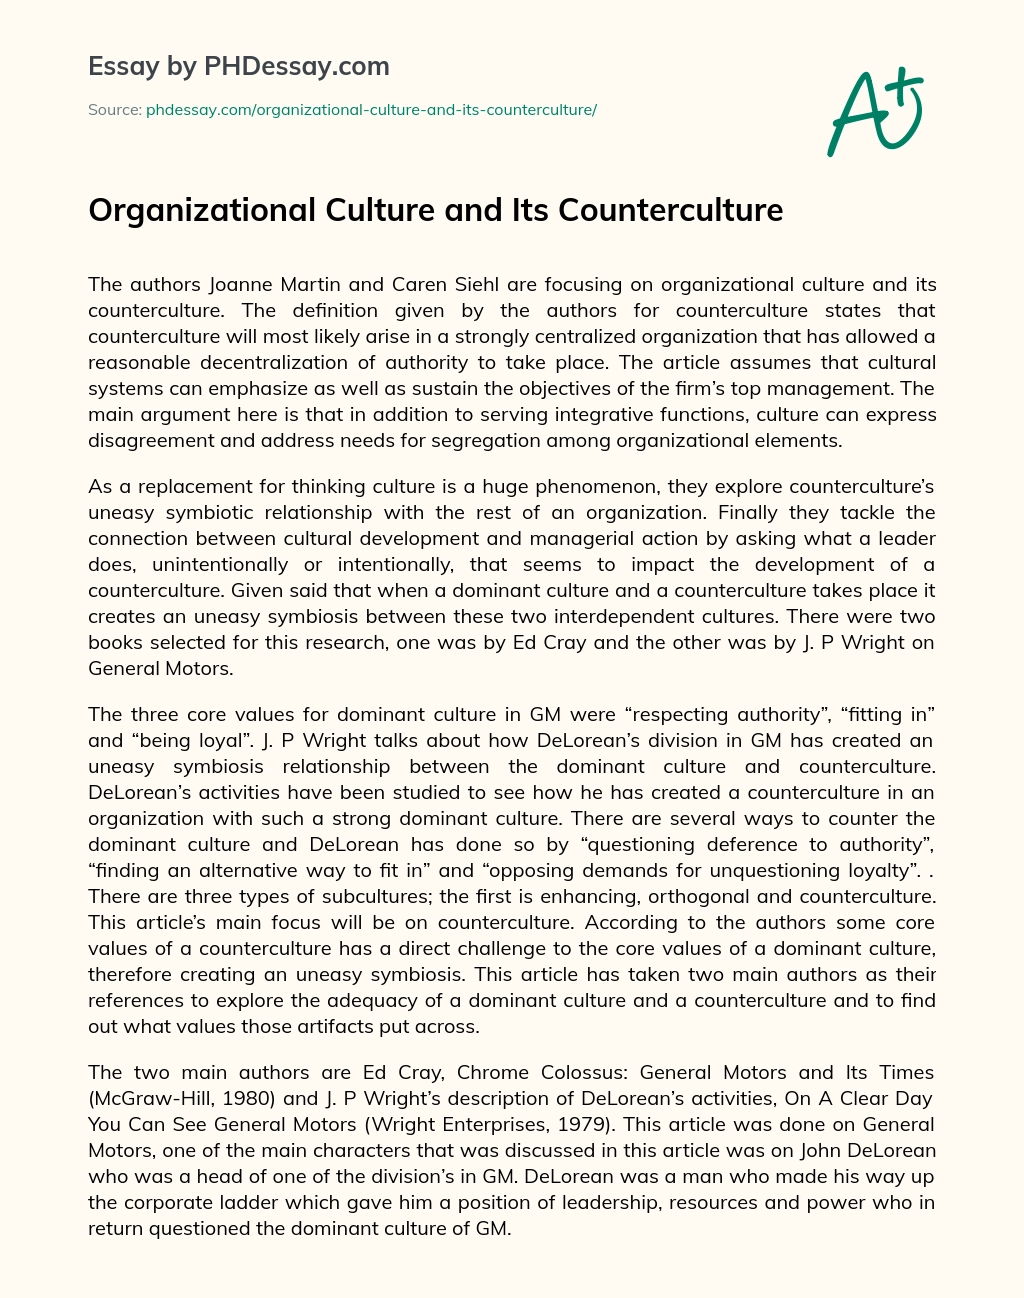 Organizational Culture and Its Counterculture essay